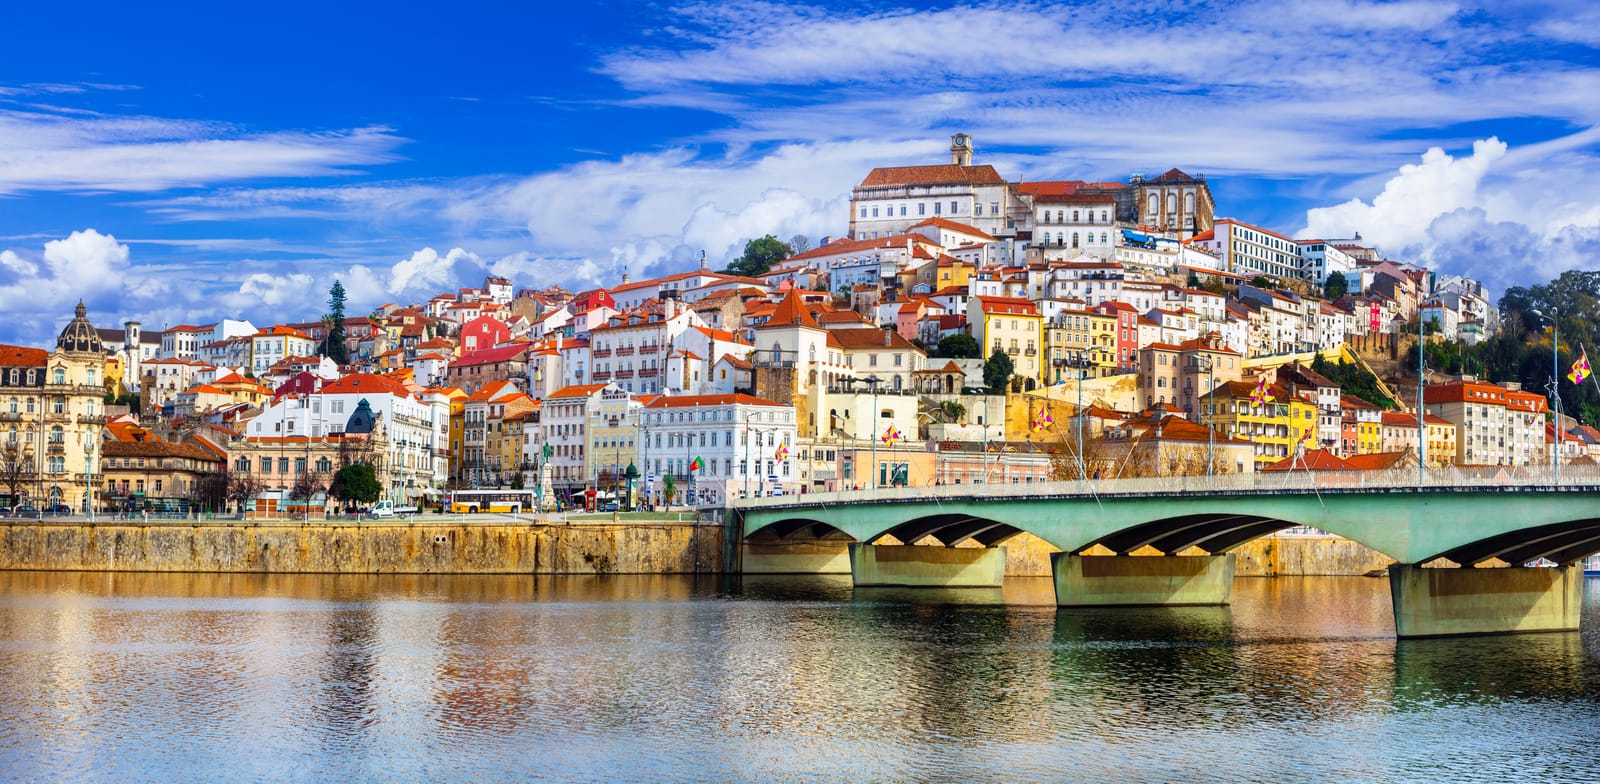 Descopera Coimbra l Bijuteria medievala a Portugaliei